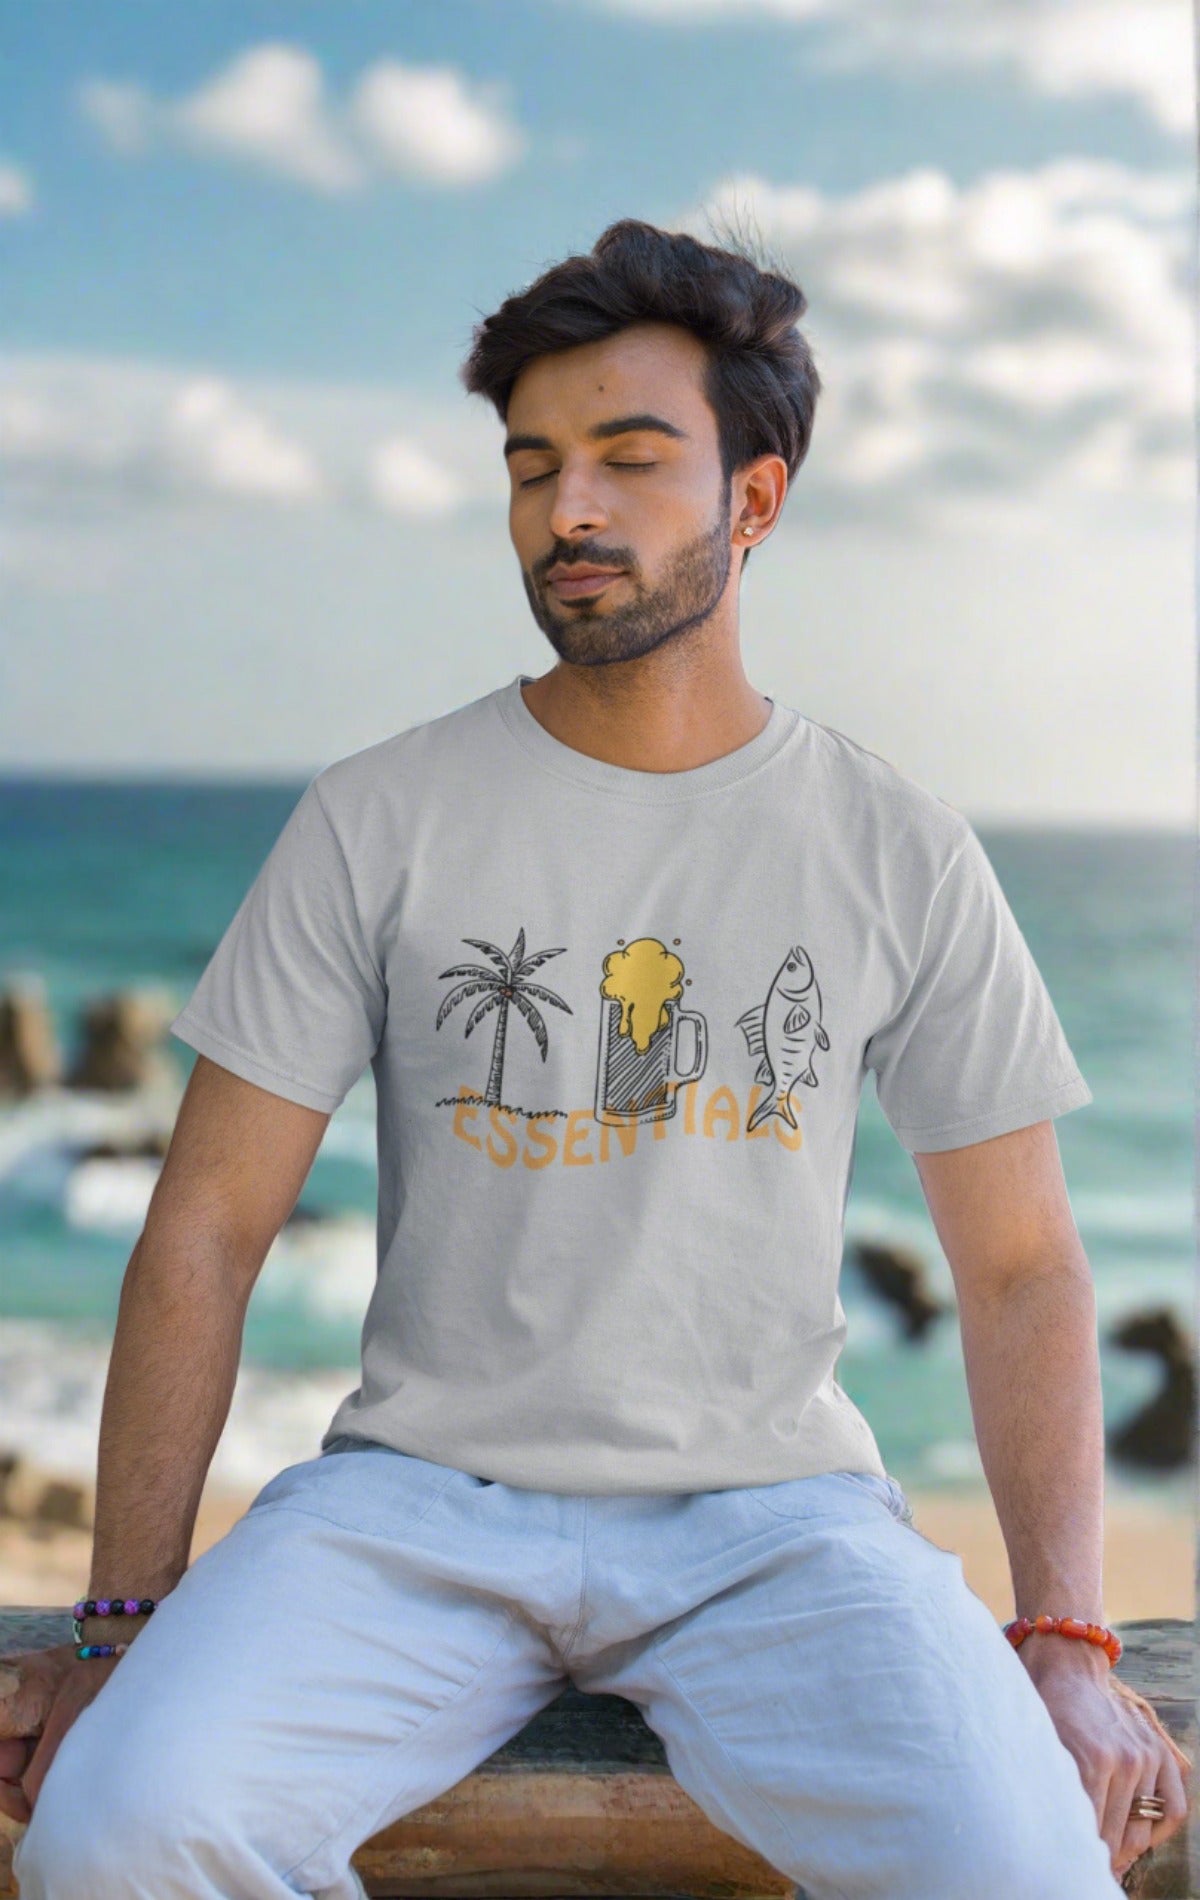 Looking for the perfect Goa souvenir? This t-shirt celebrates Goa's essentials: beaches, brews & seafood. Shop for unique Goa-themed apparel.